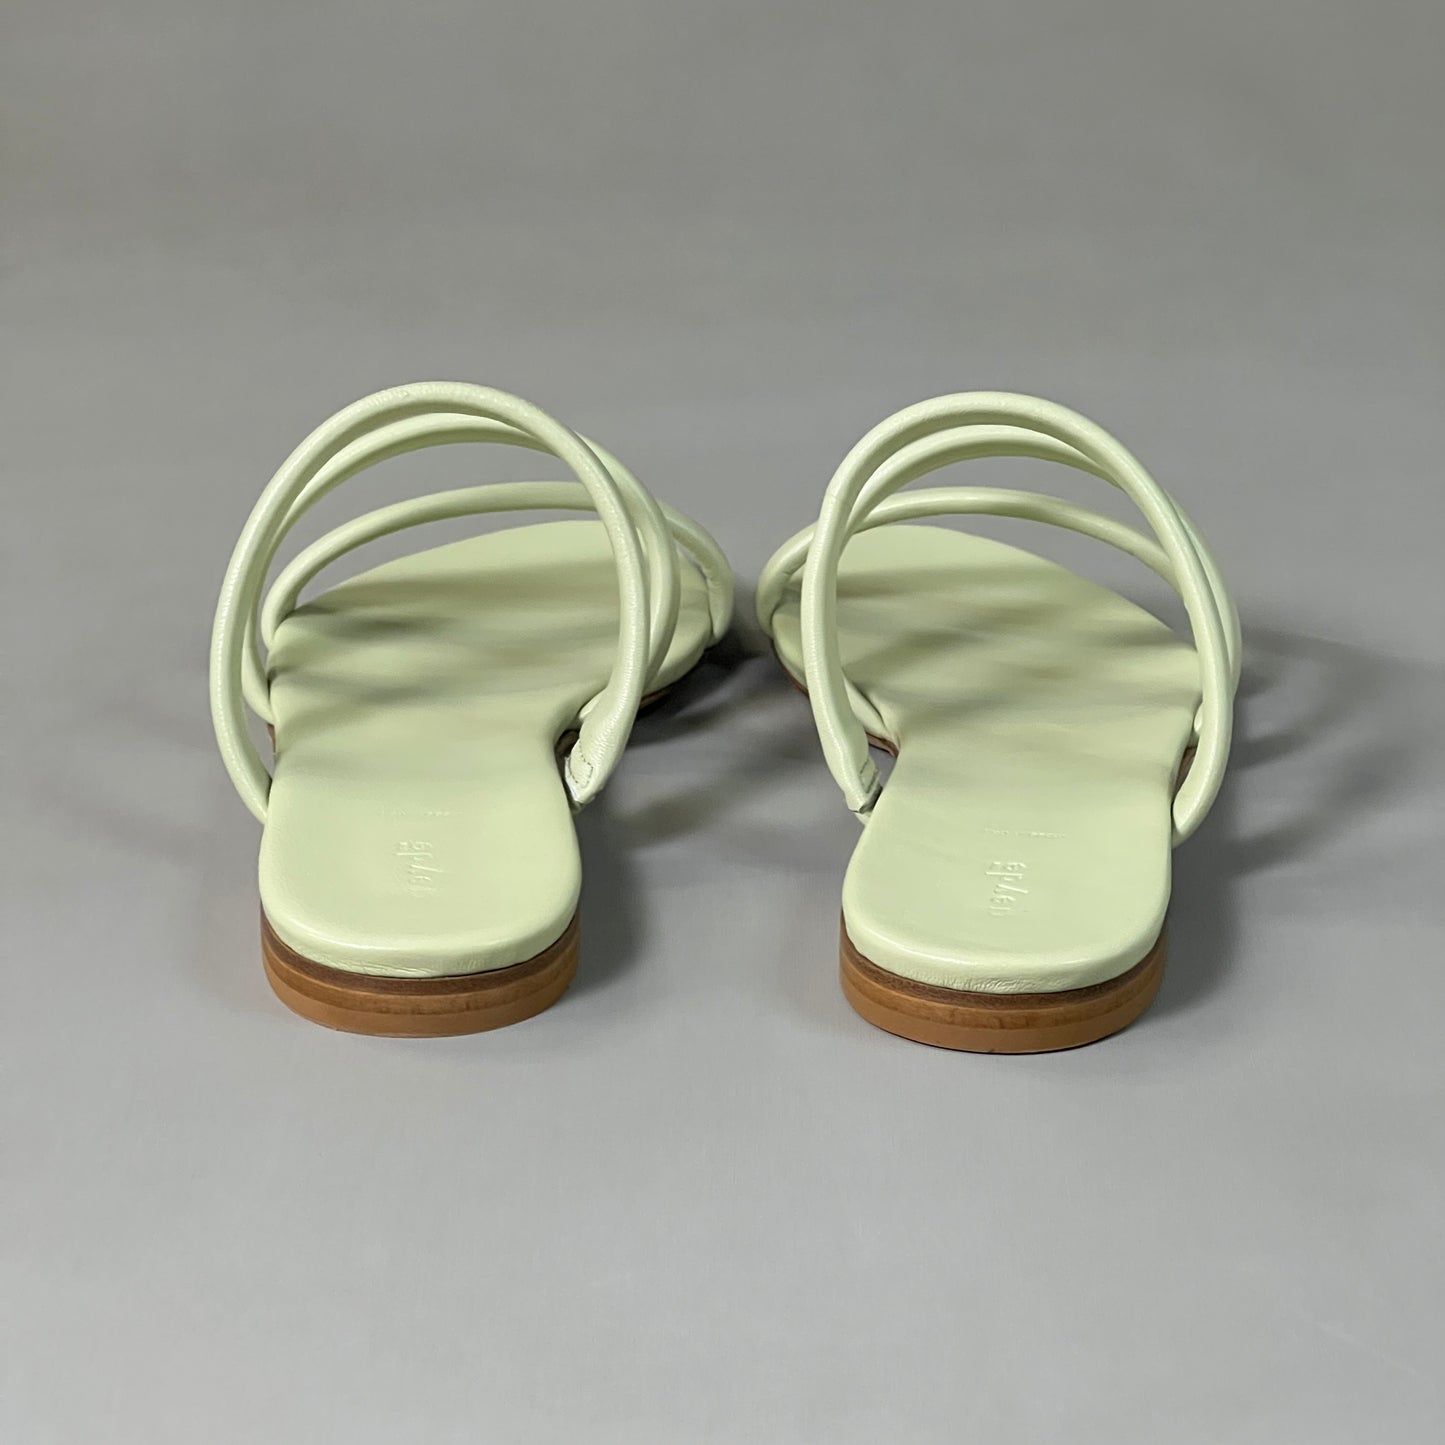 AEYDE Chrissy Pistachio Nappa Leather Sandals Women's Sz 7, EU 37, UK 4 Green (New)